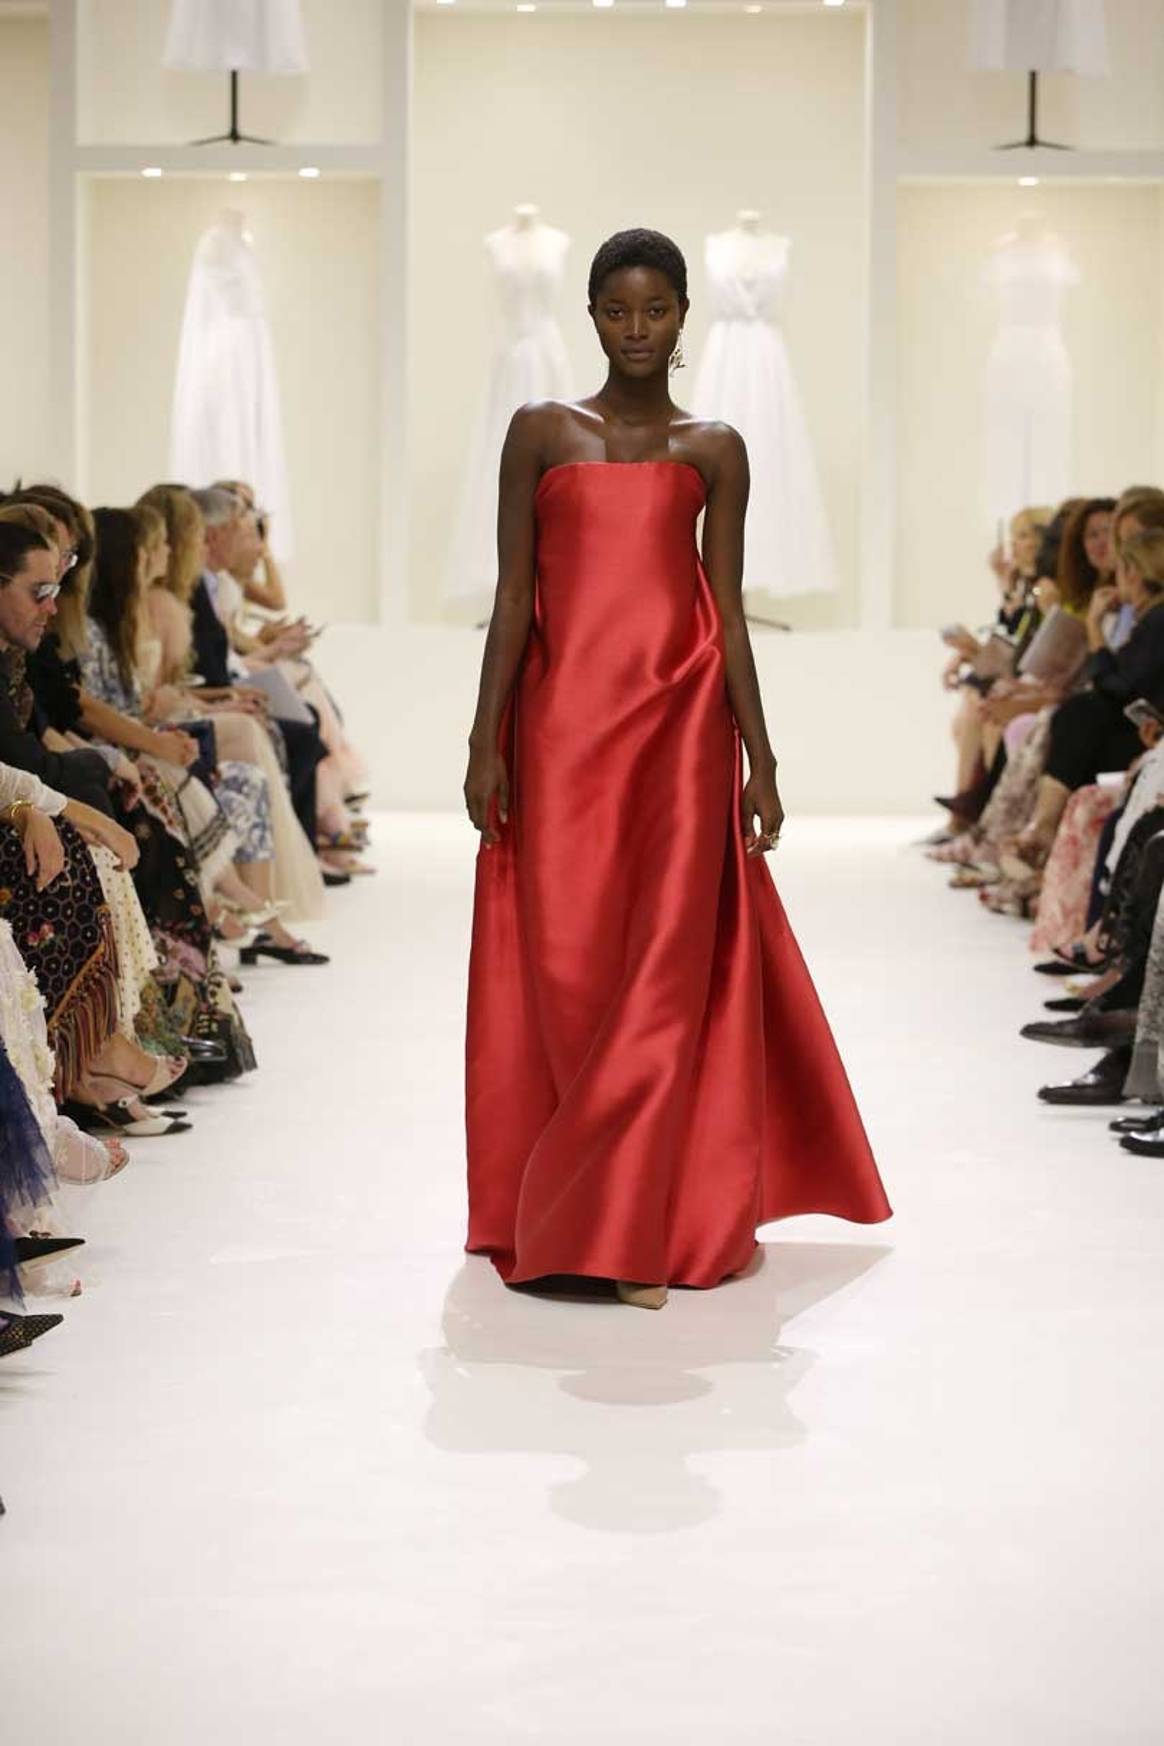 Dior bans Instagram bling at Paris haute couture week